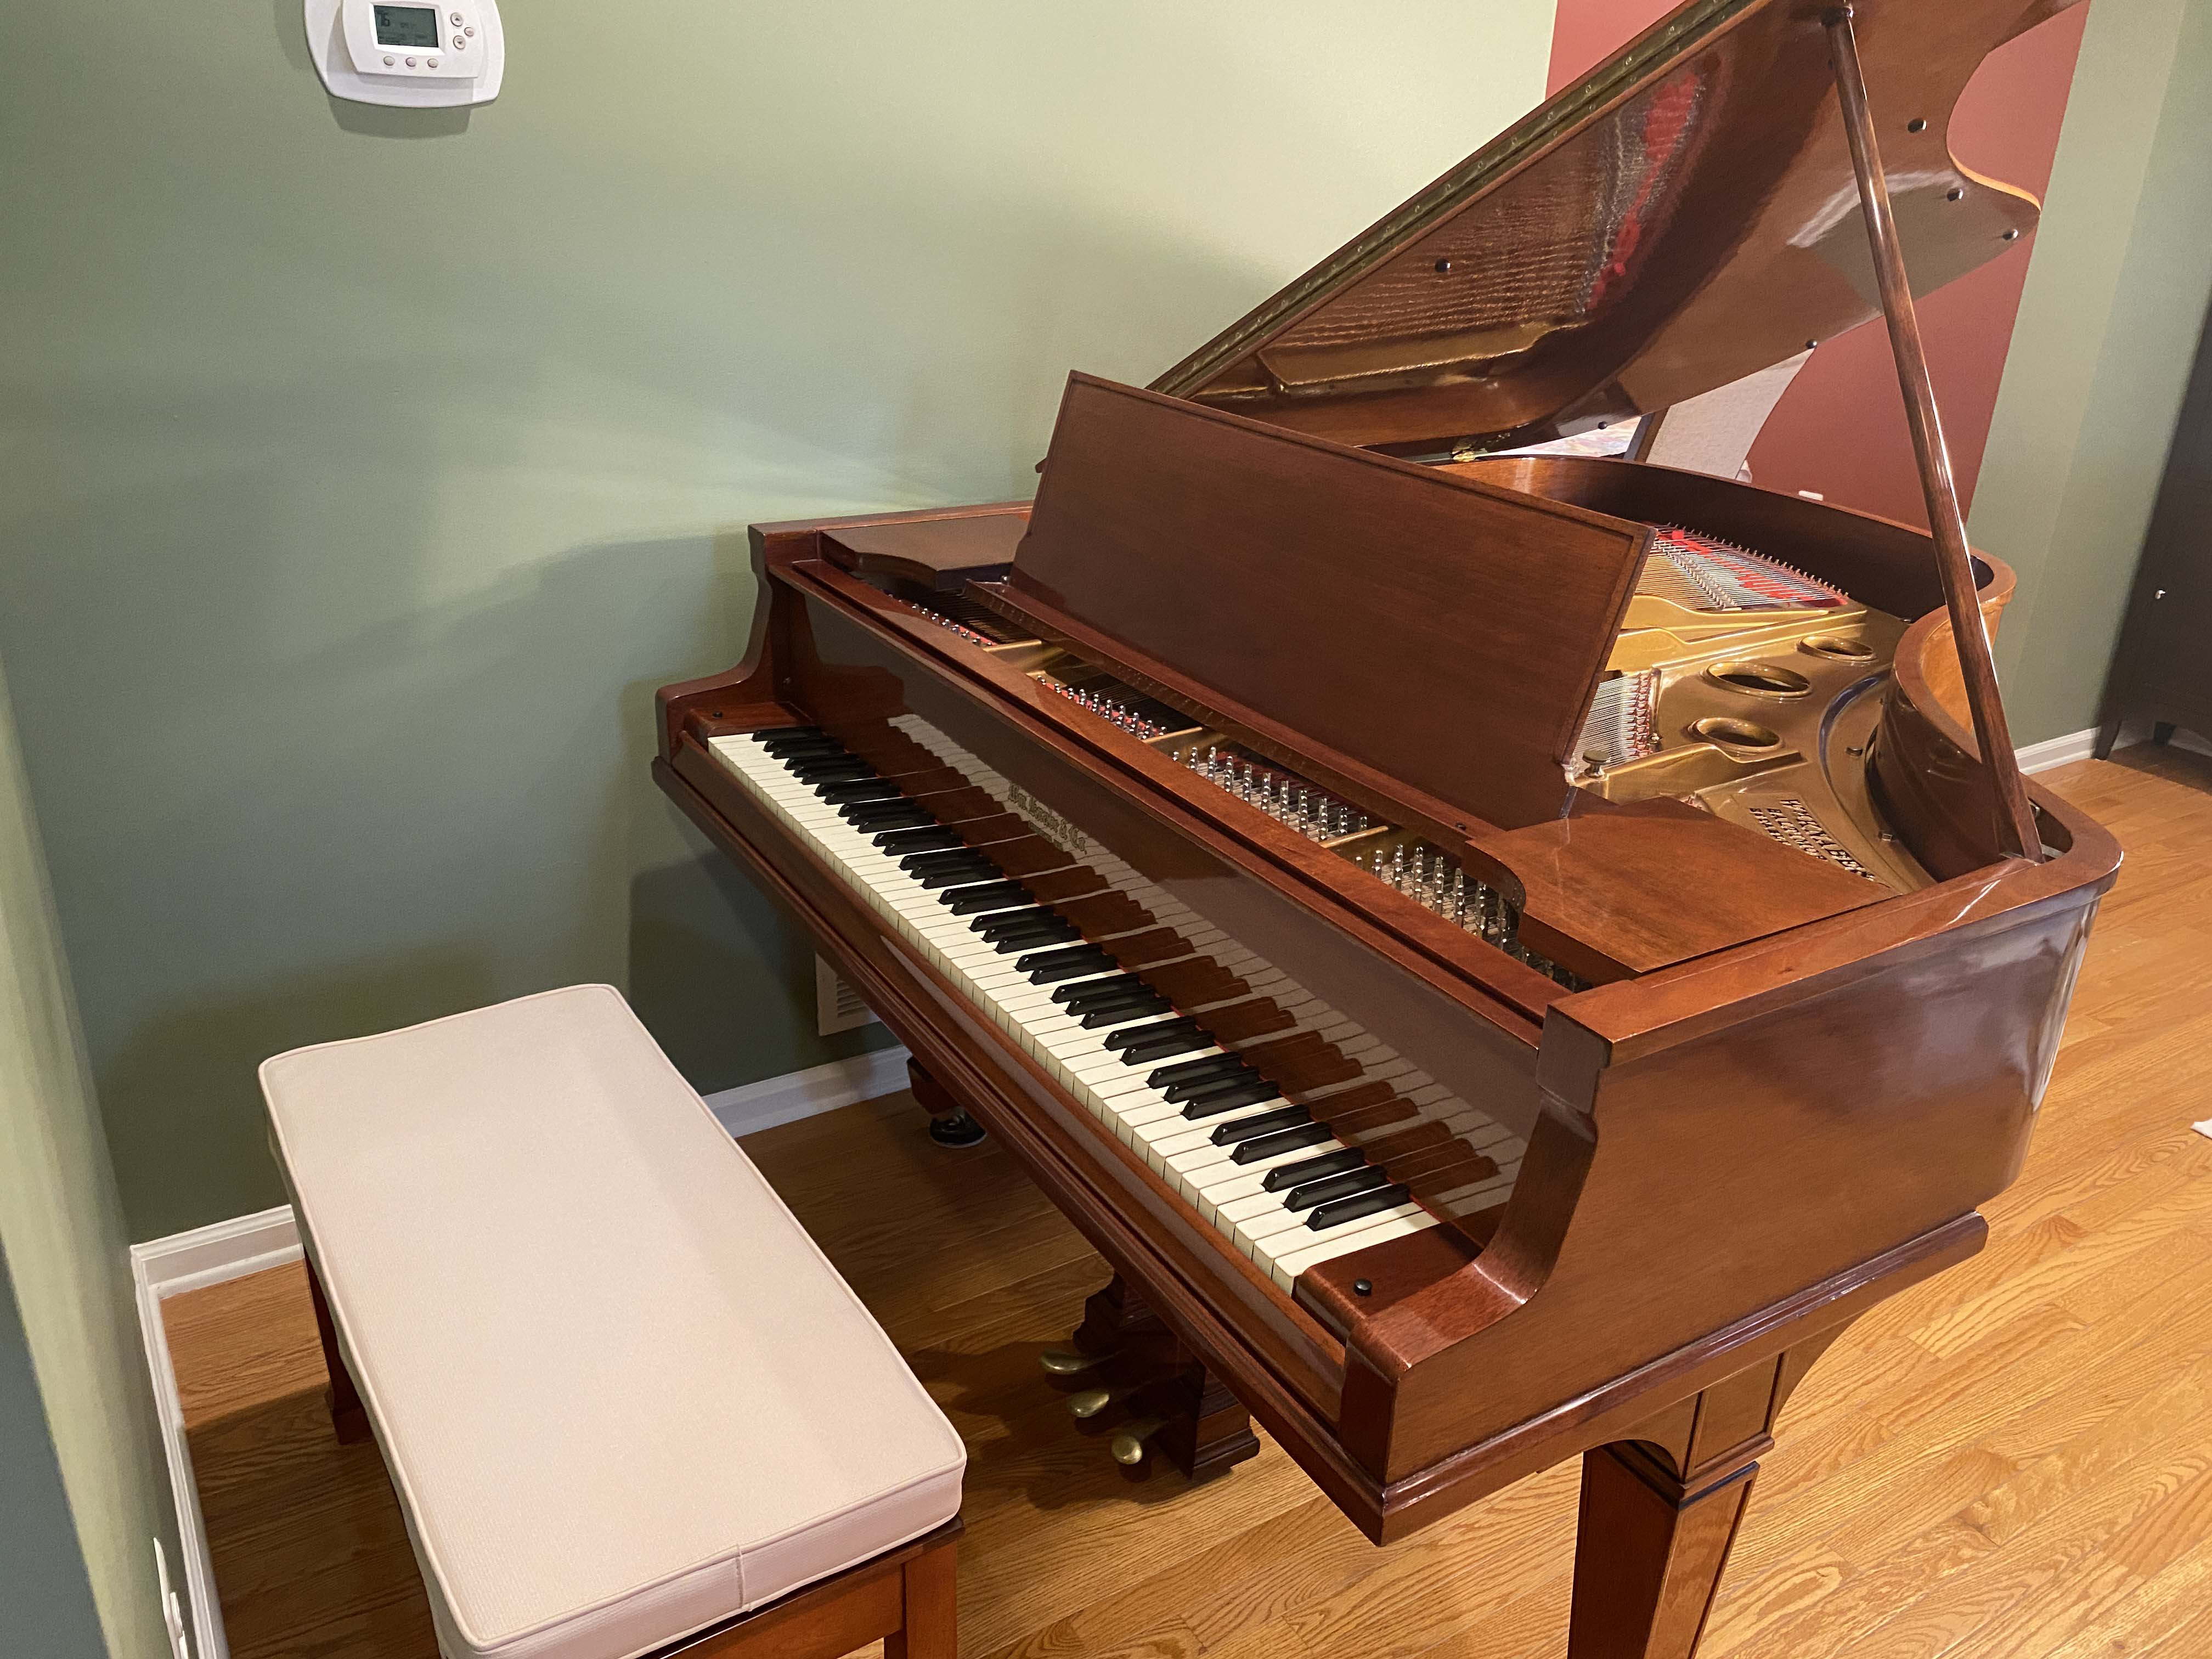 Wm. Knabe Premium Grand Piano for Sale